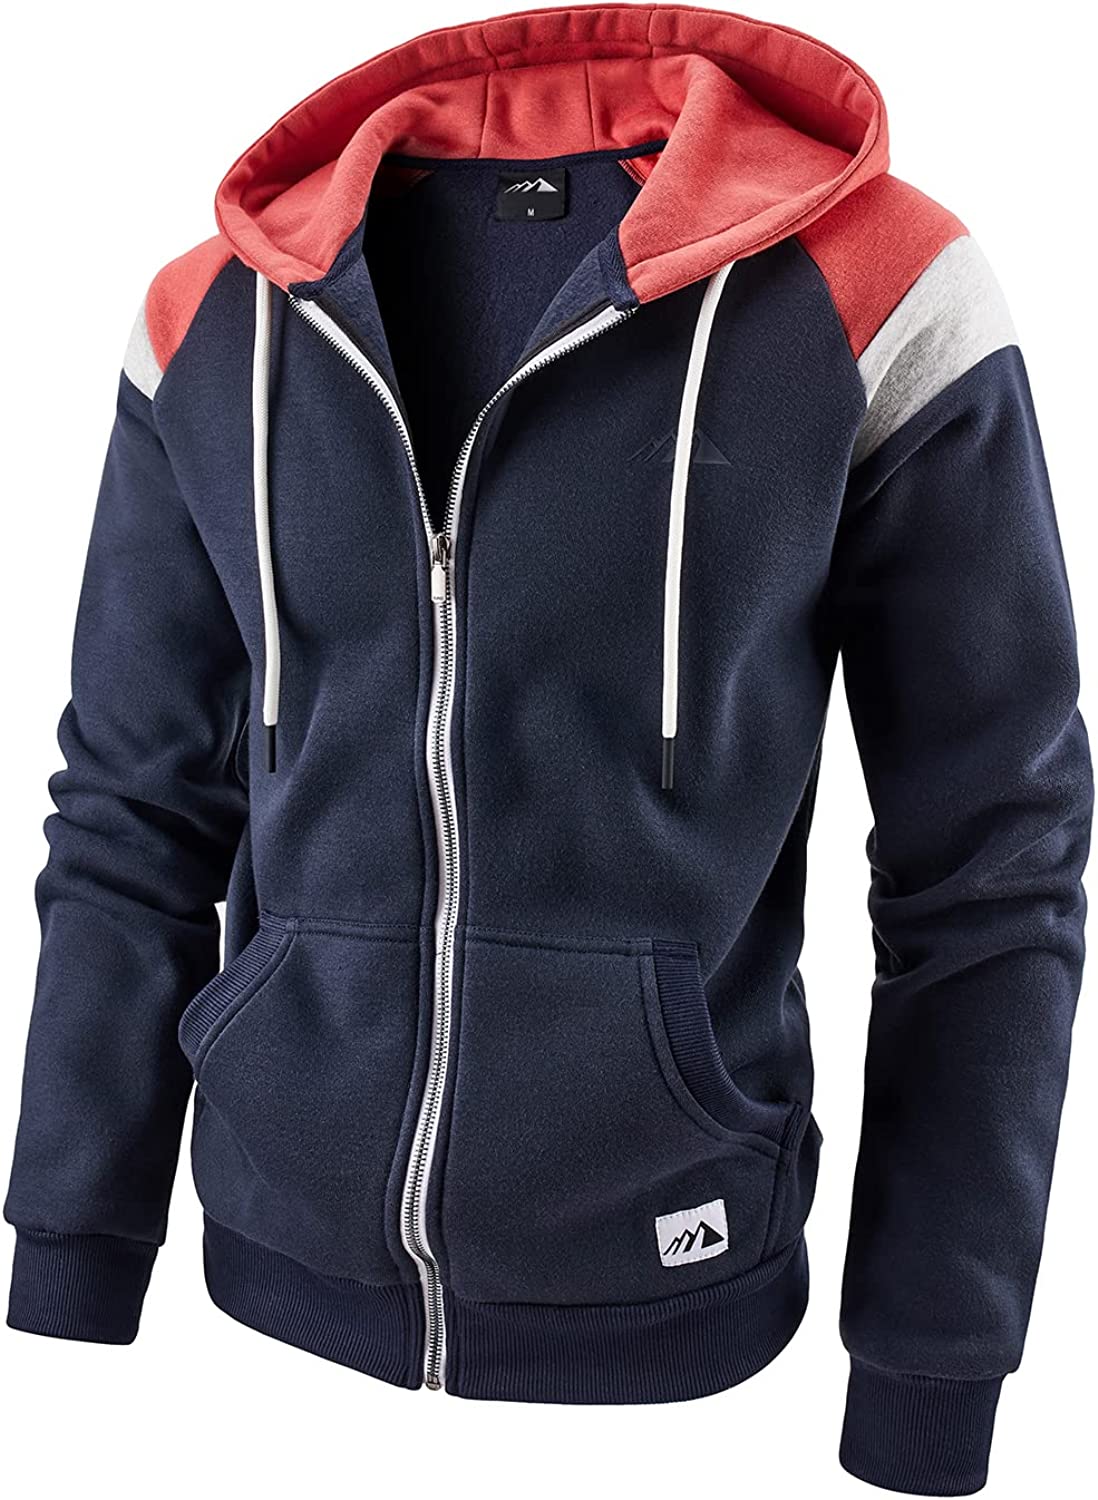 Buy OHSNMAKSL Hoodies for Men sherpa Warm Fleece Hoodie Jacket Sweatshirt  Full Zip Sport Workout Coats, Blue, Small at